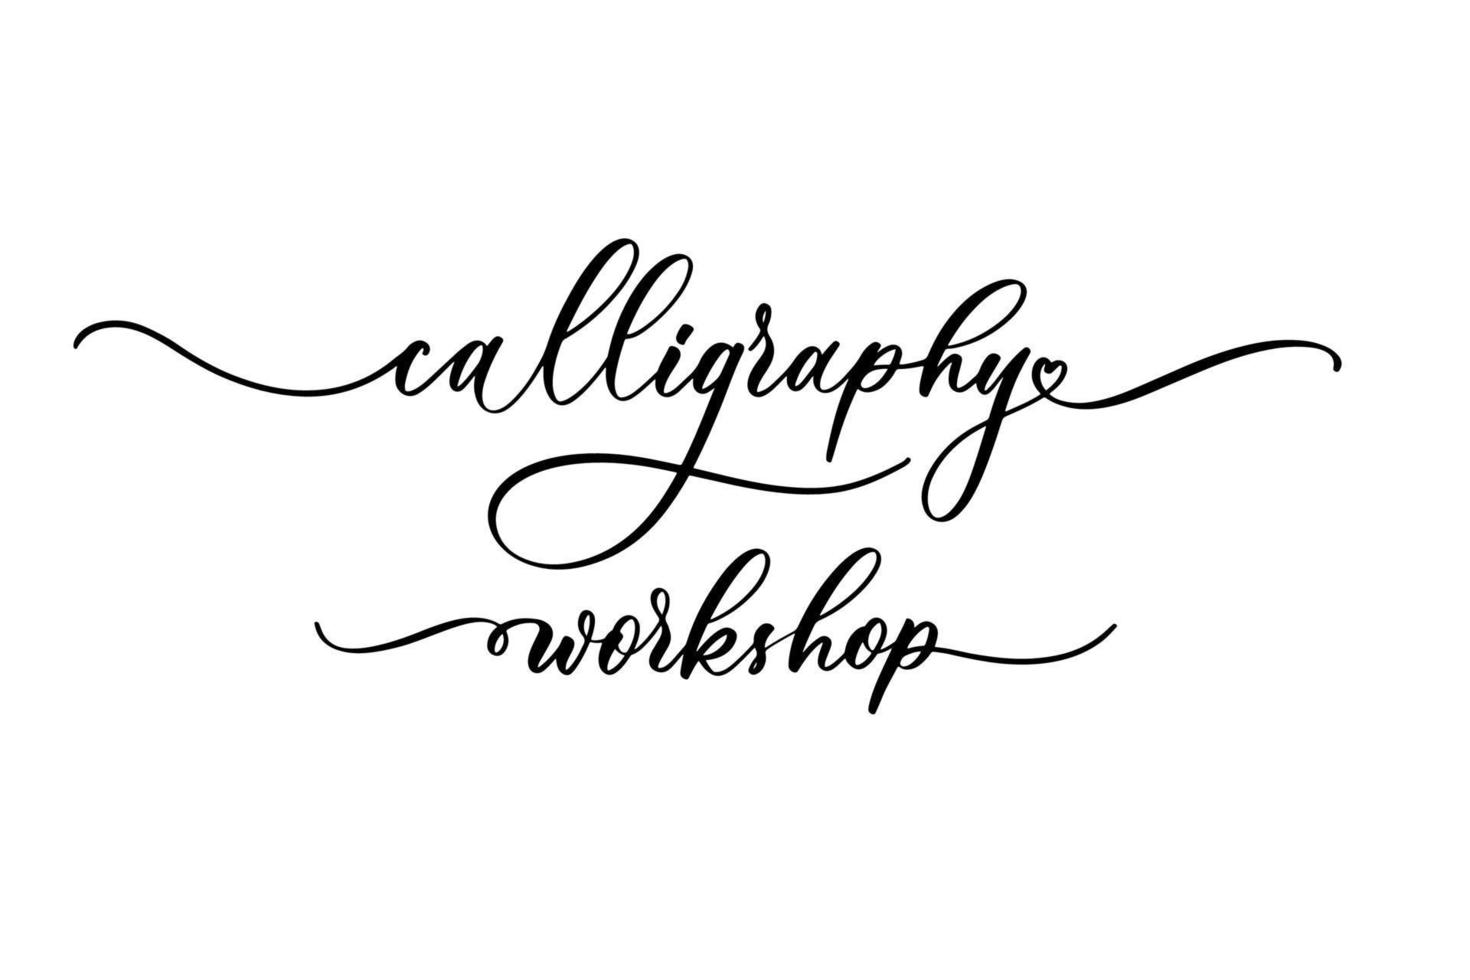 Calligraphy Workshop handwritten lettering. Modern calligraphy for poster, banner, advertising. vector